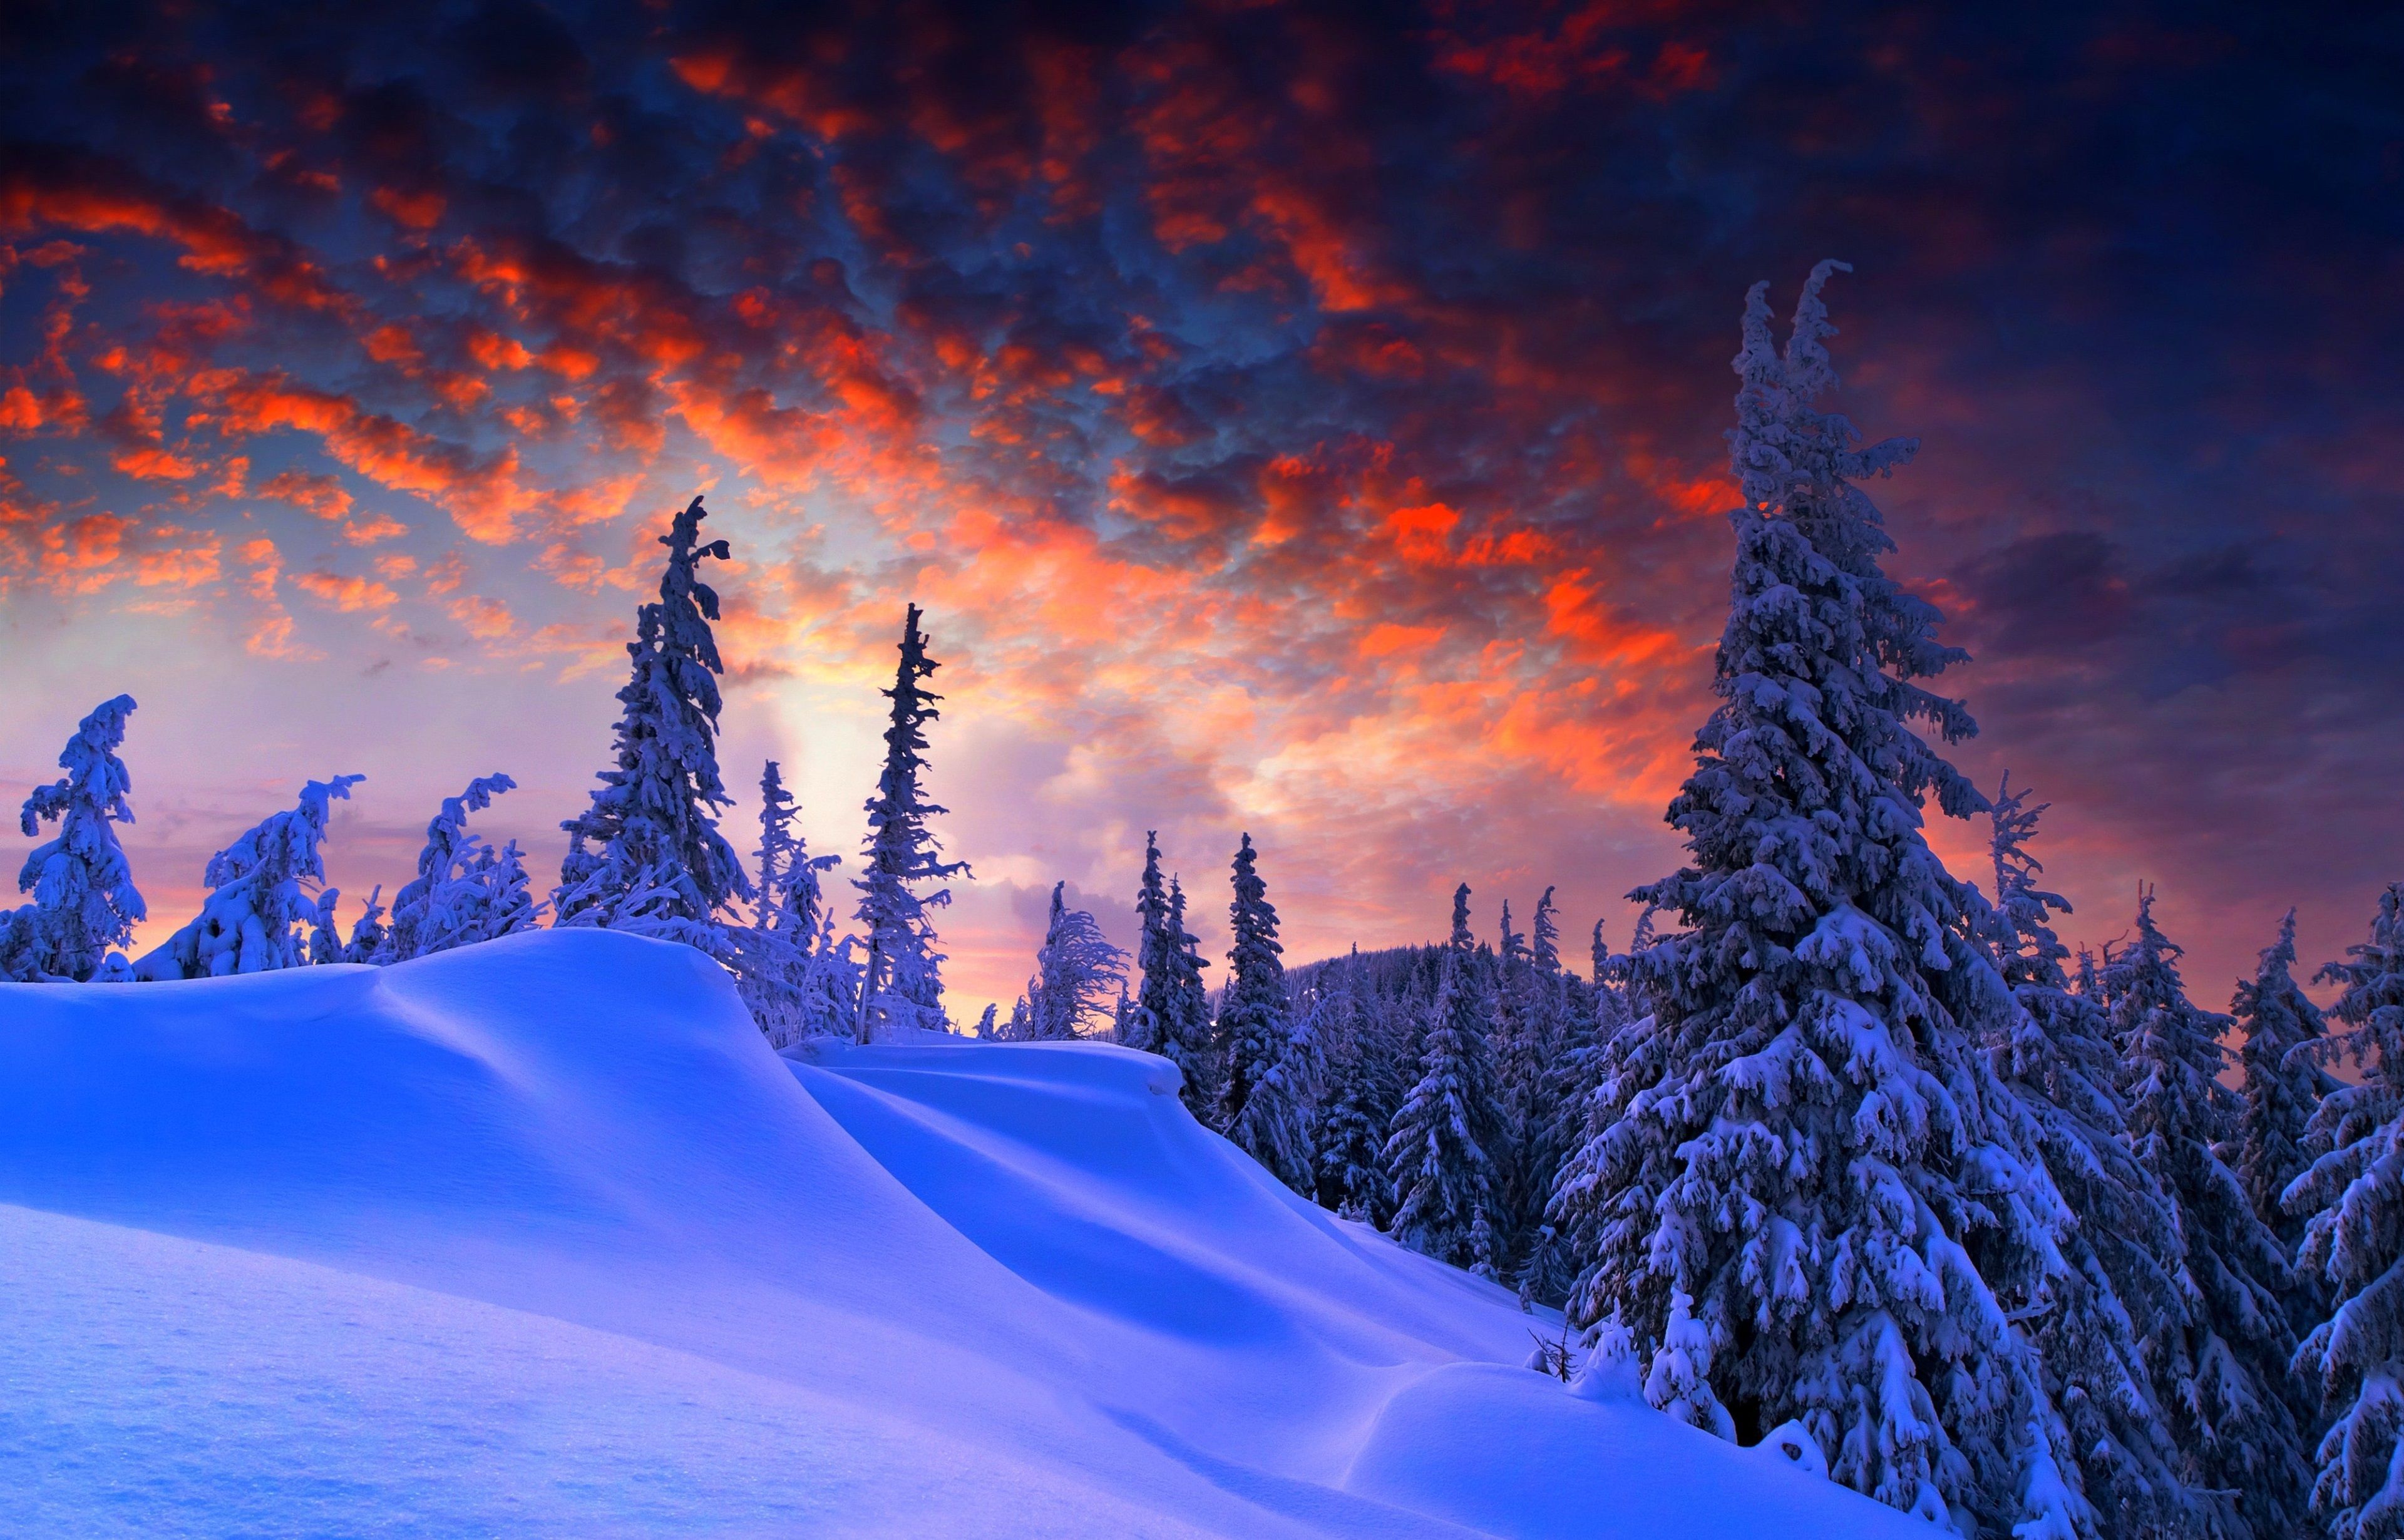 winter 4k desktop wallpaper HD. Winter wallpaper, Winter desktop background, Winter sunset